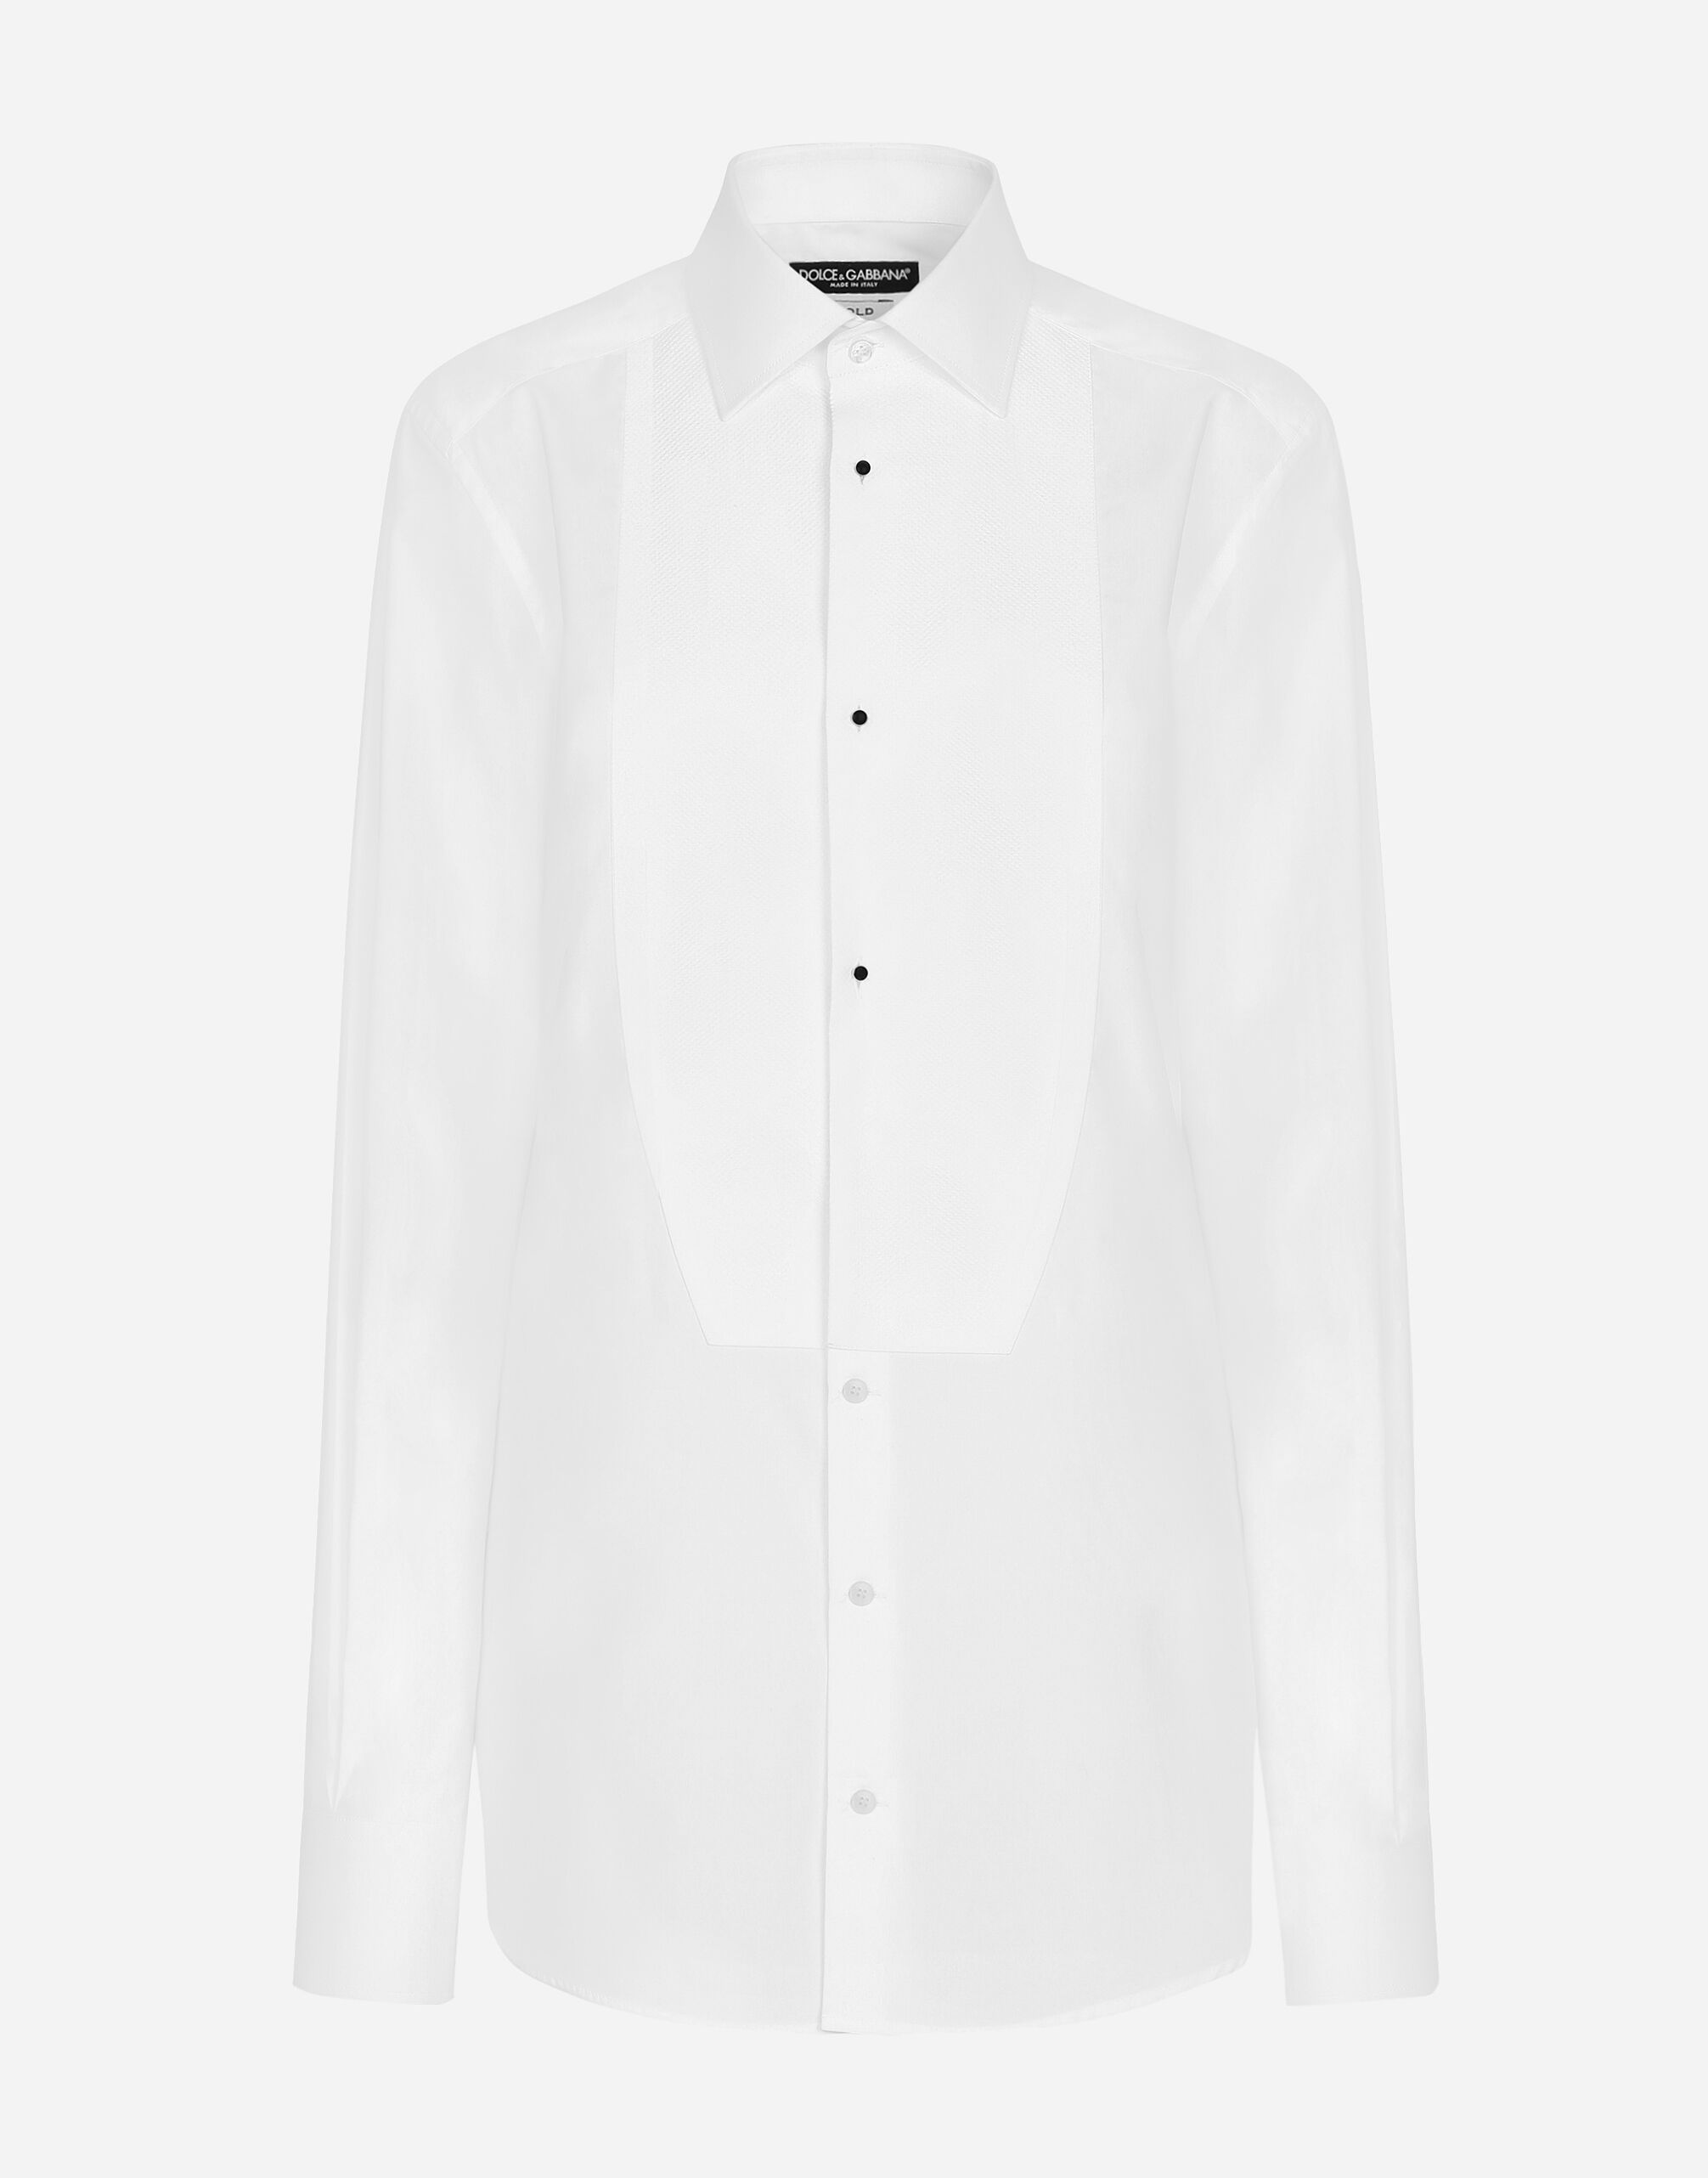 Dolce & Gabbana قميص توكسيدو قطني بمقدمة قميصية بيكيه مطبعة F6JGHTHS10S